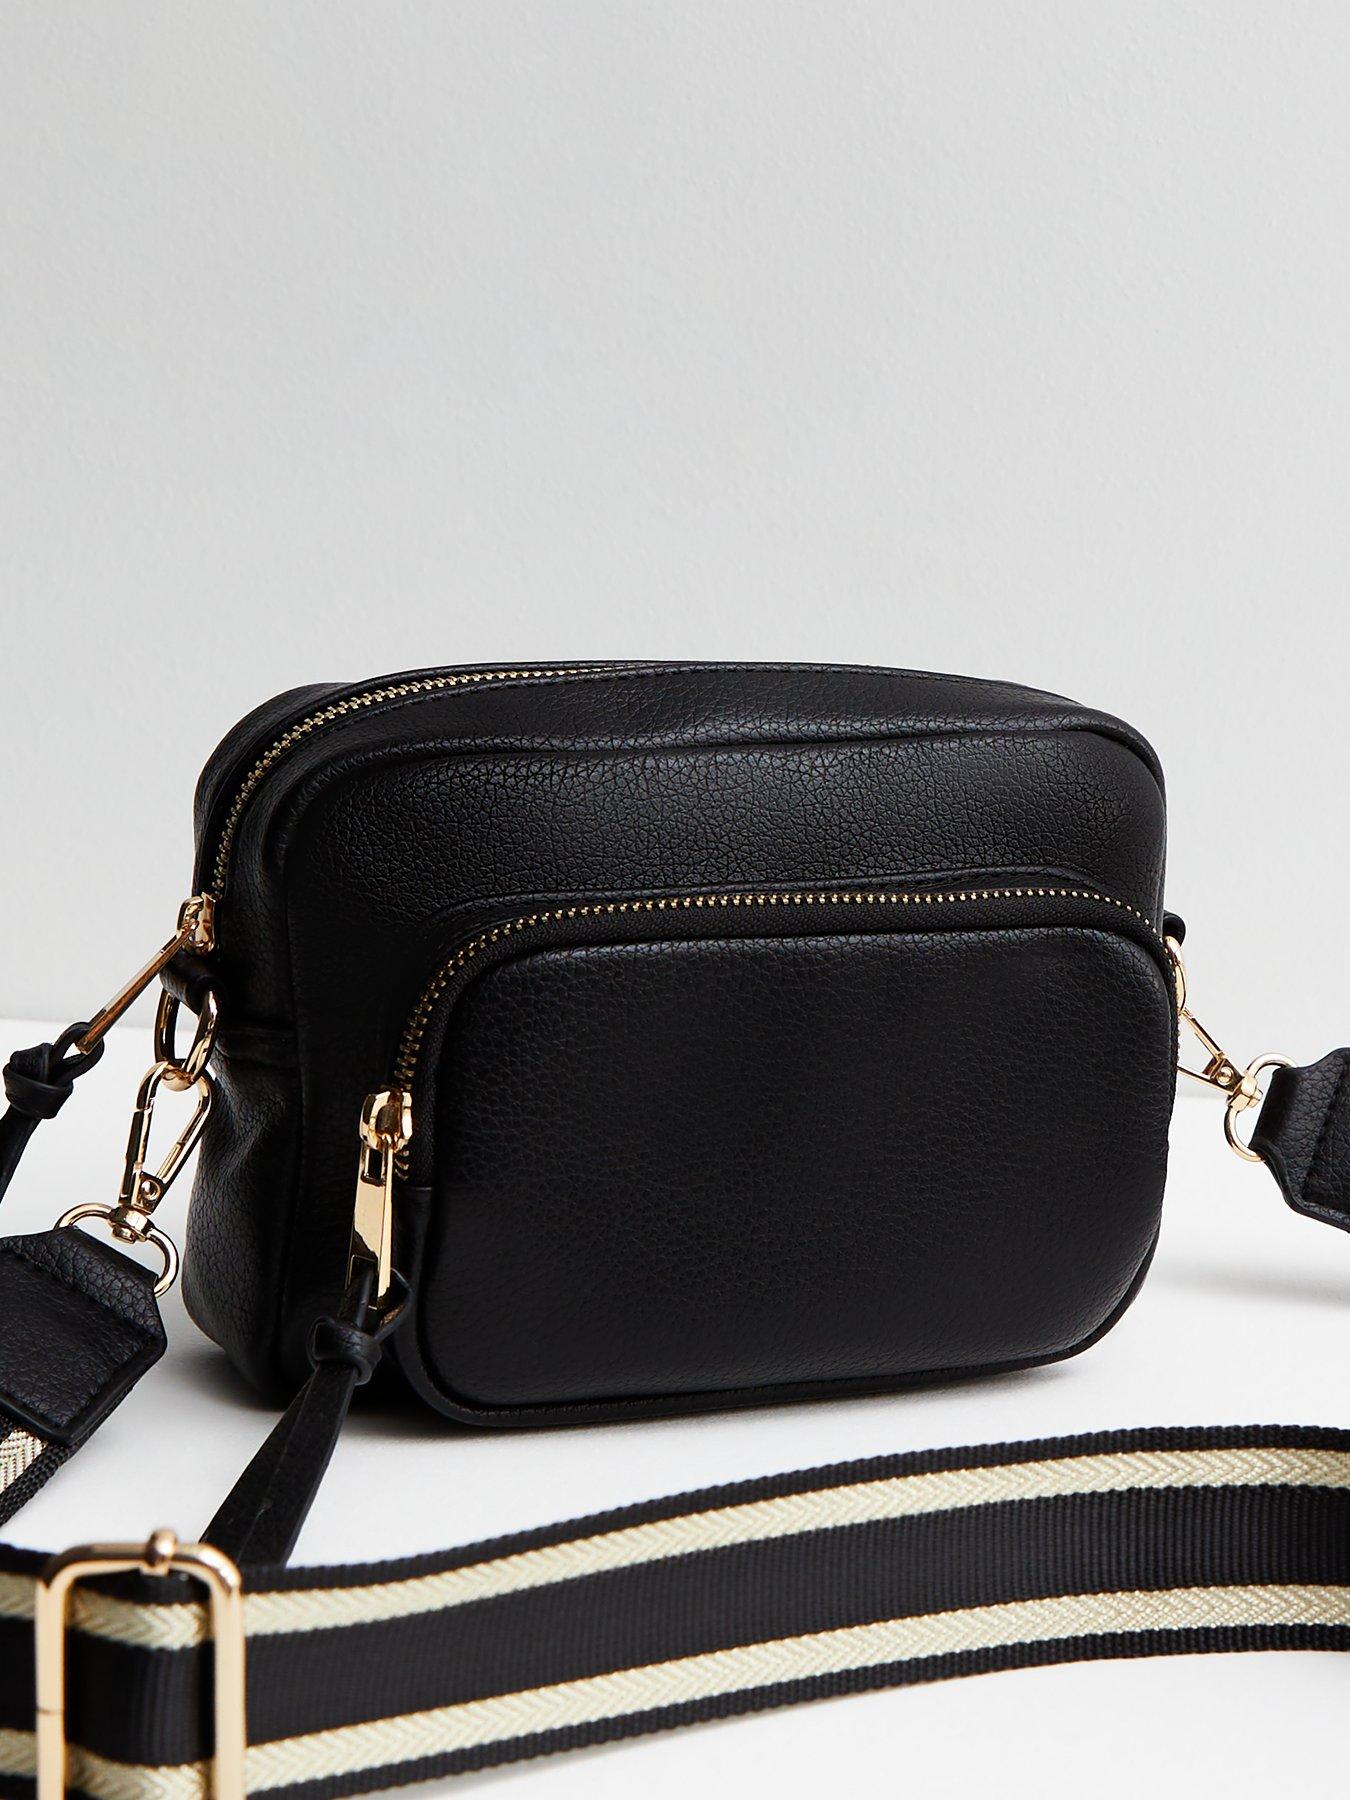 New Look Black Pocket Front Cross Body Camera Bag | very.co.uk